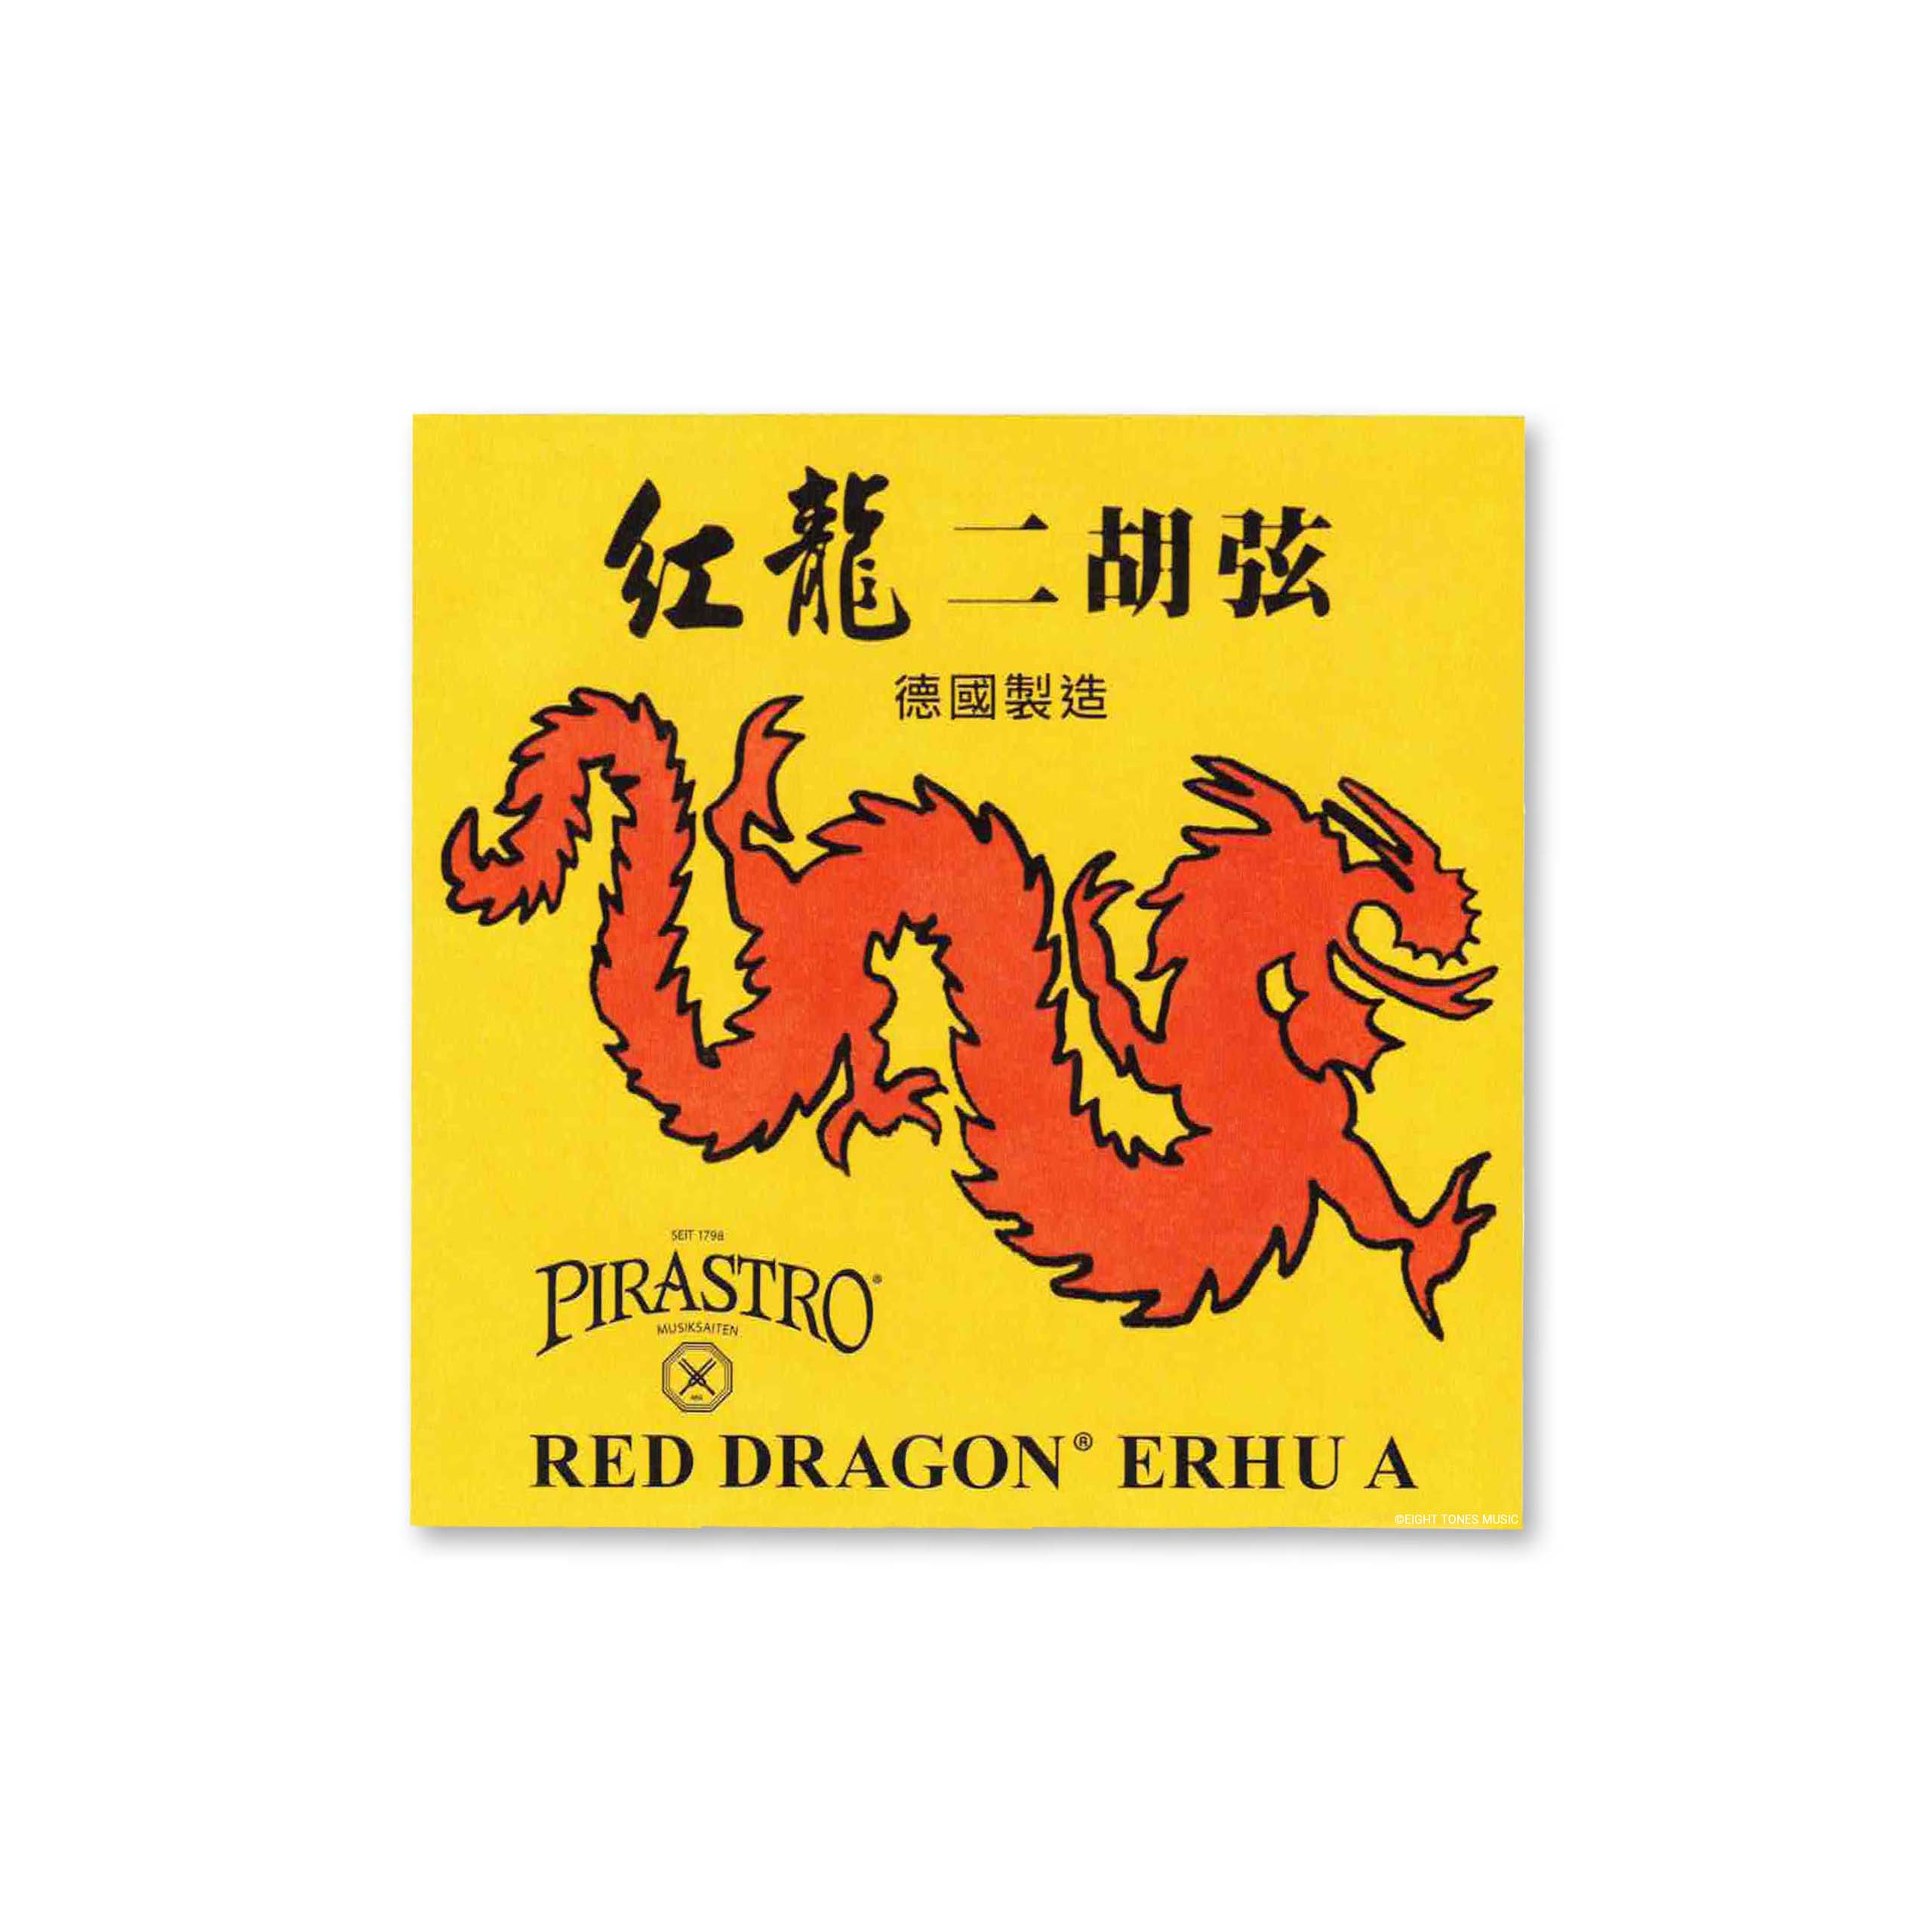 Pirastro Red Dragon Erhu Strings (Set) A